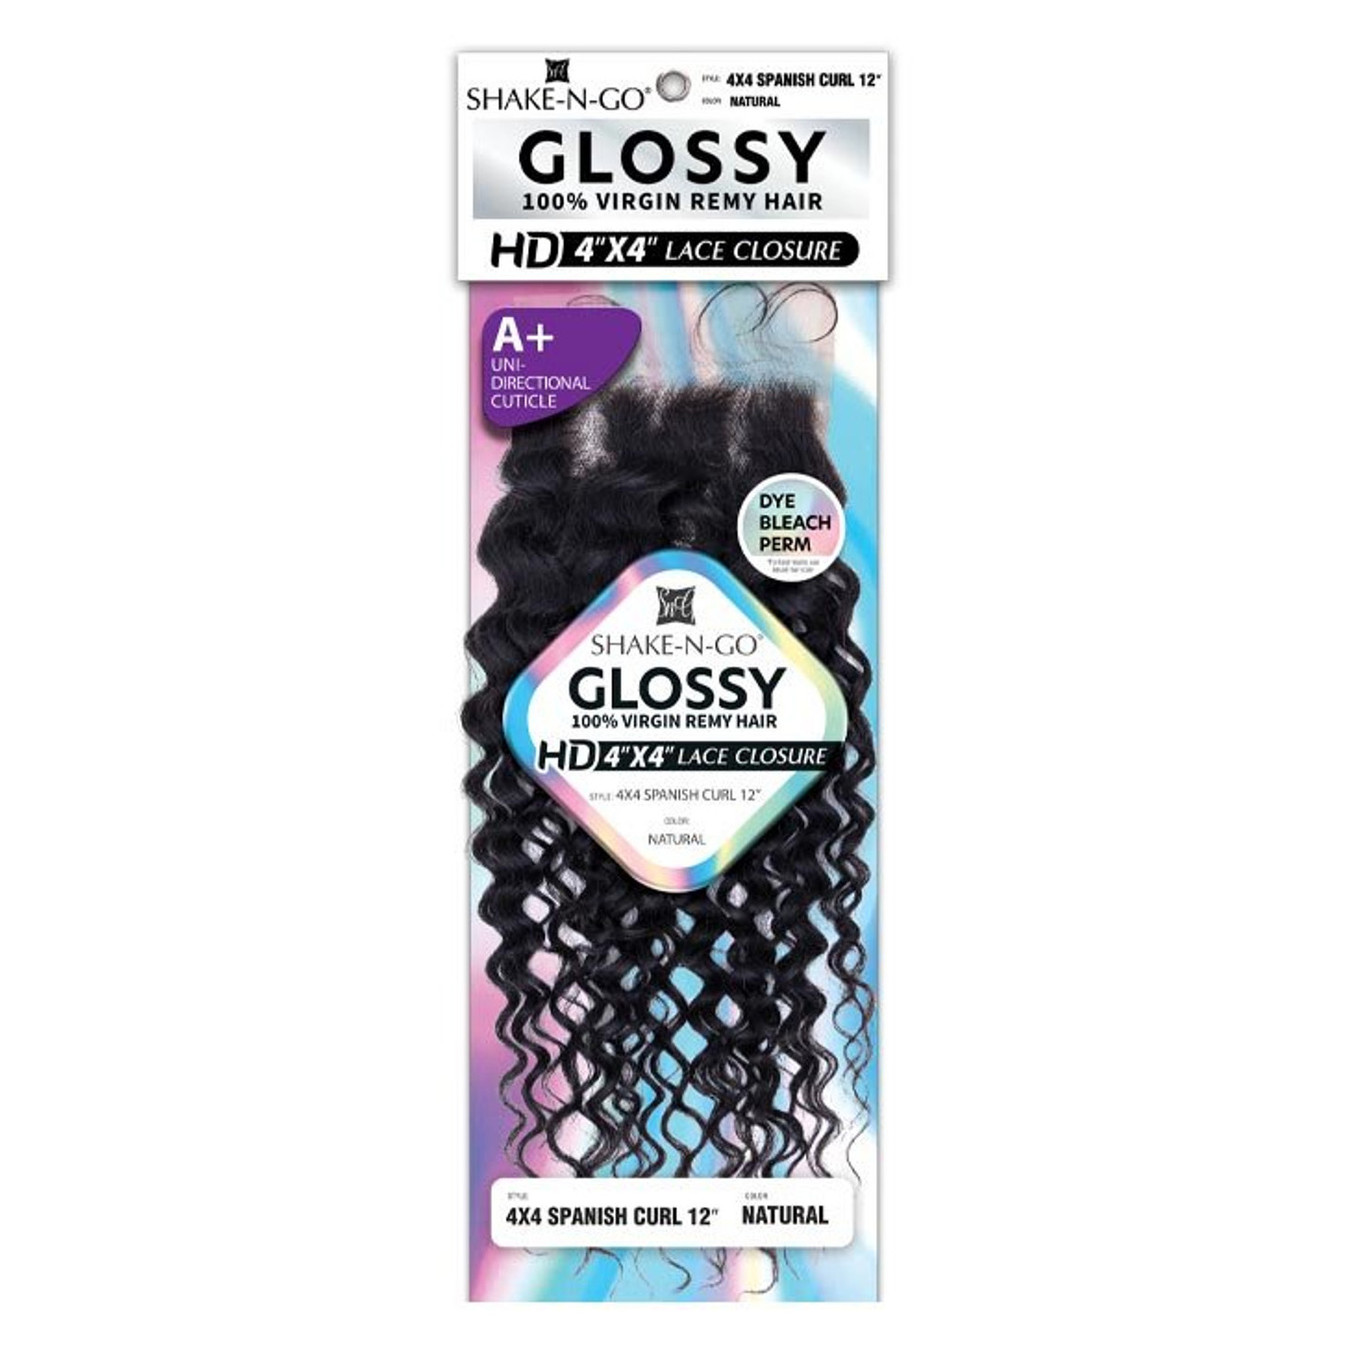 SHAKE N GO Glossy 100% Virgin Remy Hair 4x4 HD Lace Closure - Spanish Curl 12"